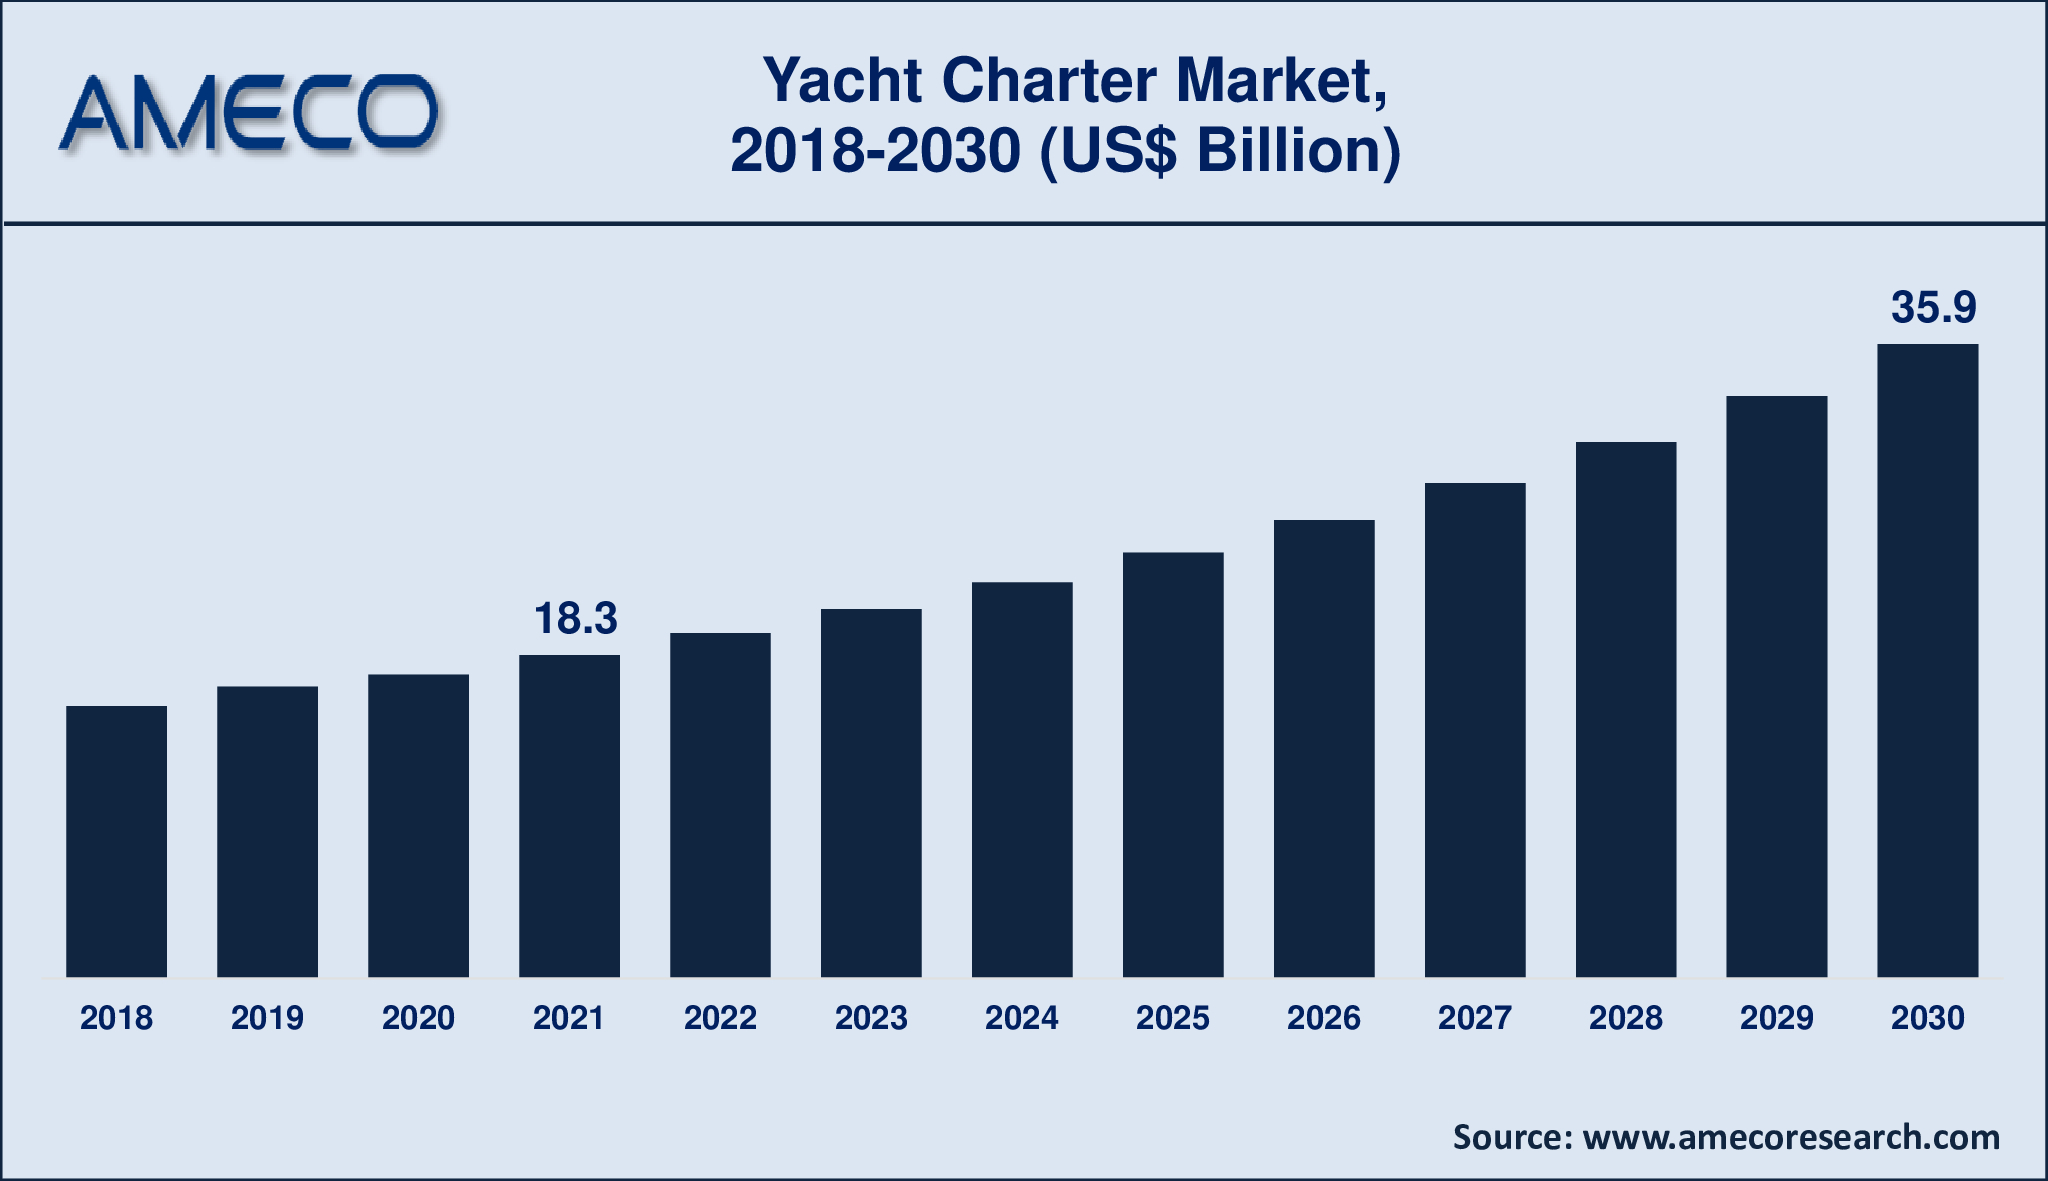 Yacht Charter Market Analysis Period